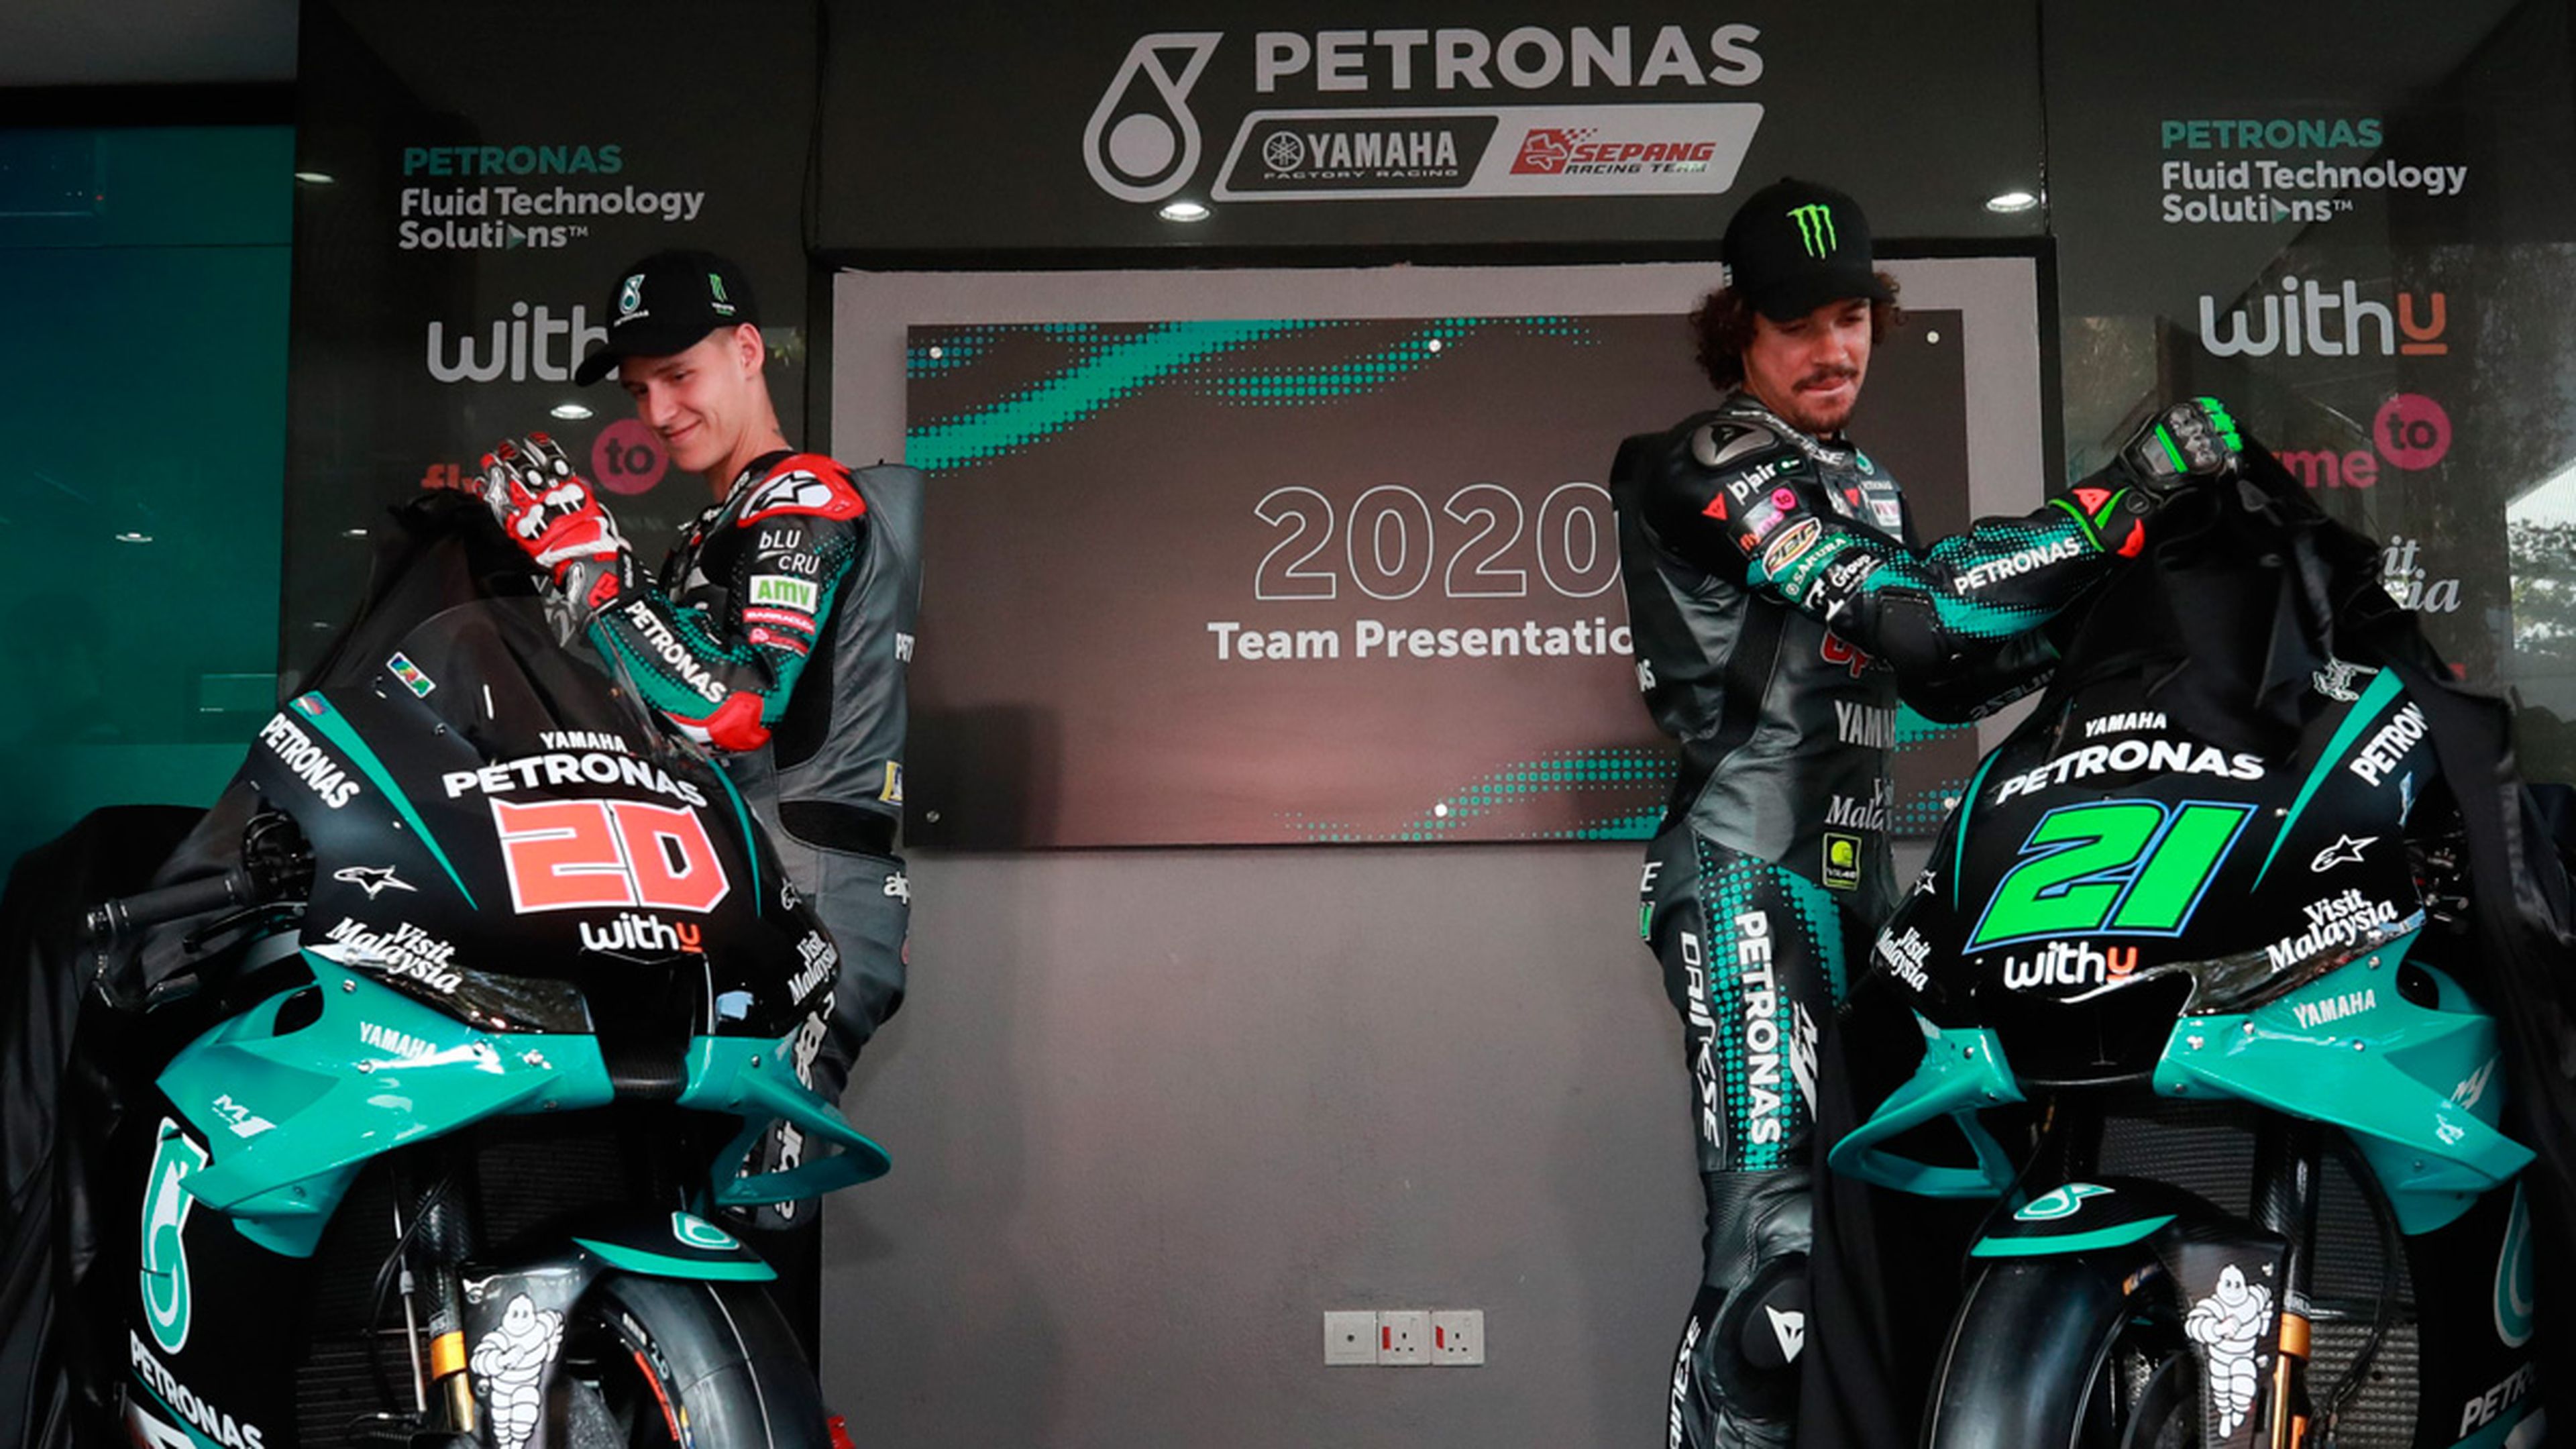 Presentacion equipo Petronas motogp 2020